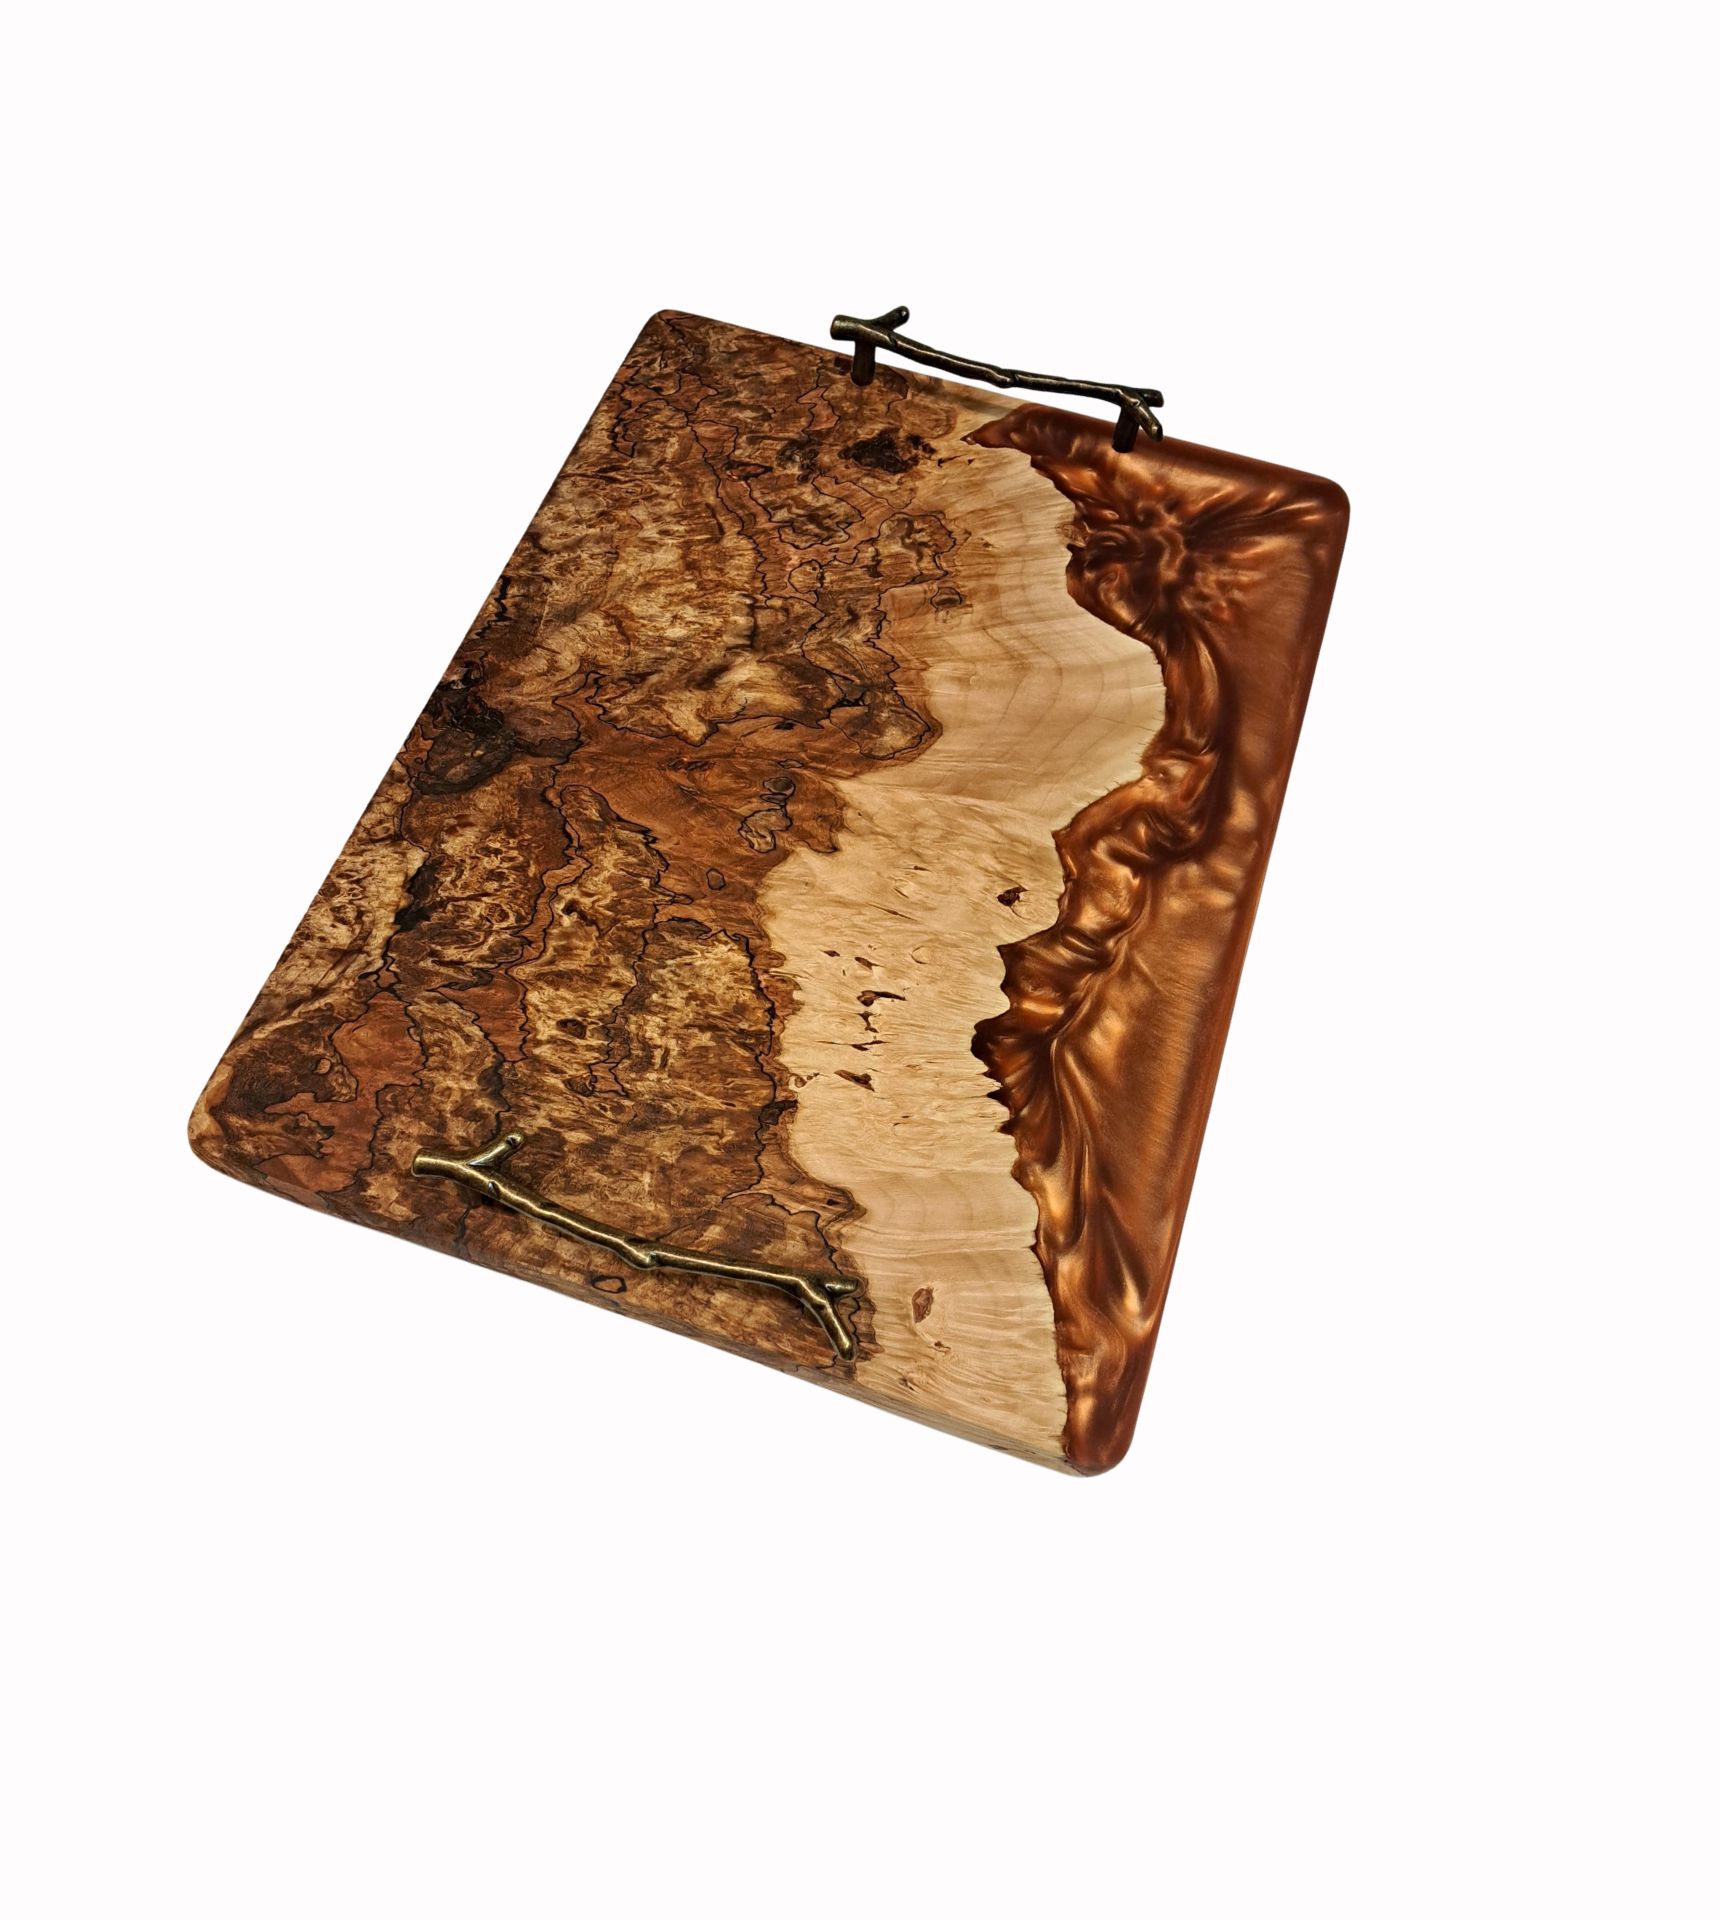 SHHWG Charcuterie Board Copper/Maple $200 at Hunter Wolff Gallery